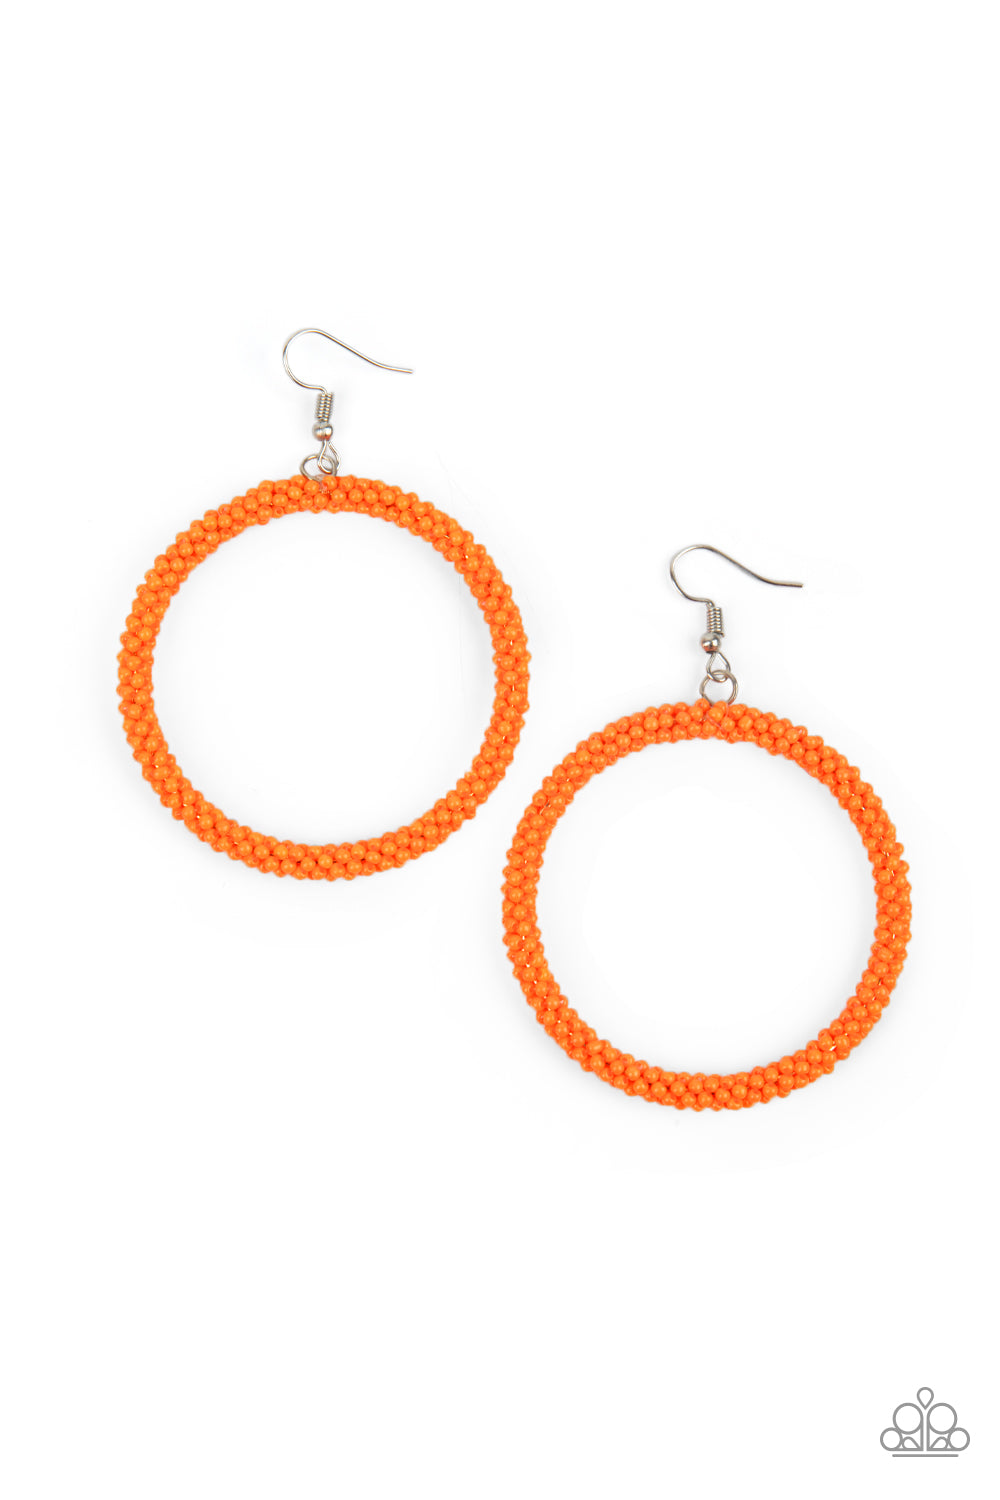 Beauty and the BEACH - Orange Earrings